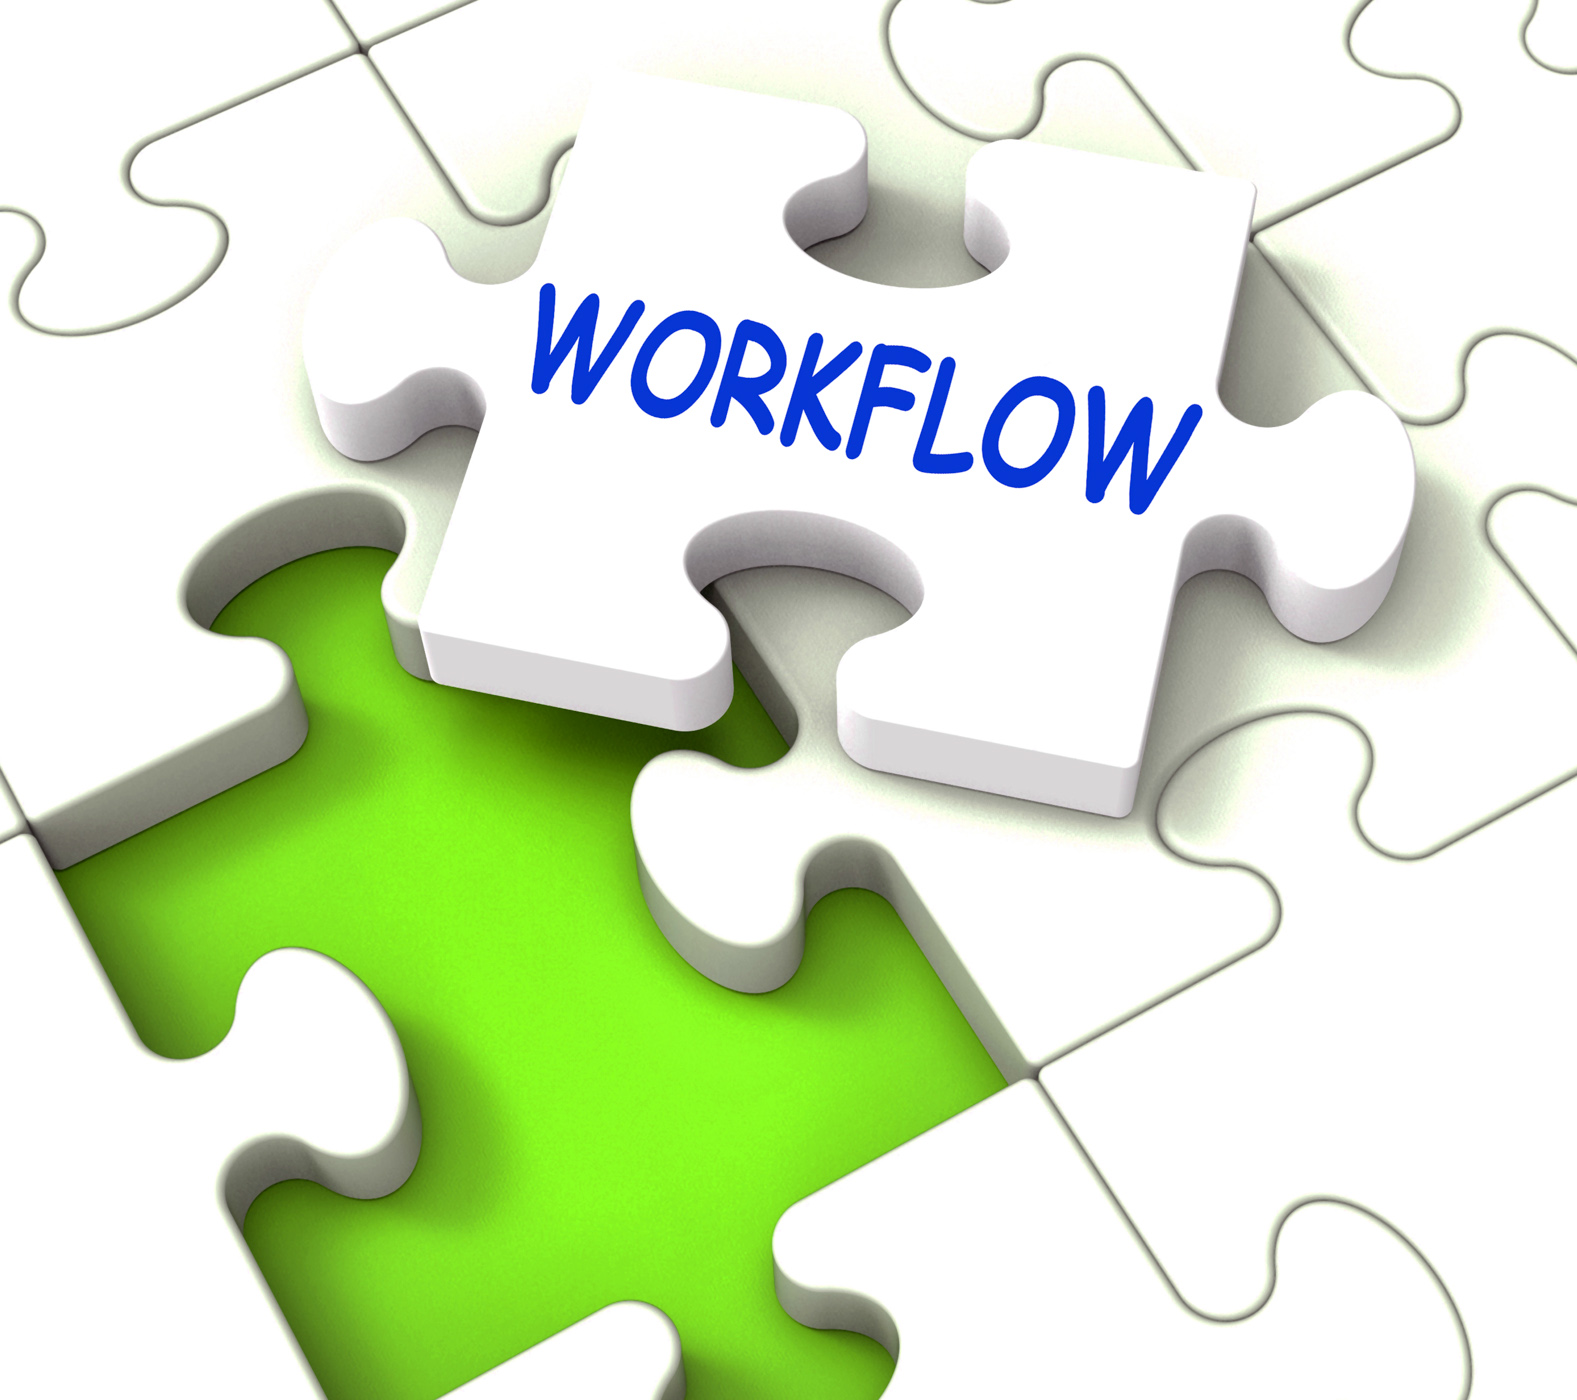 Workflow puzzle shows structure process flow or procedure photo